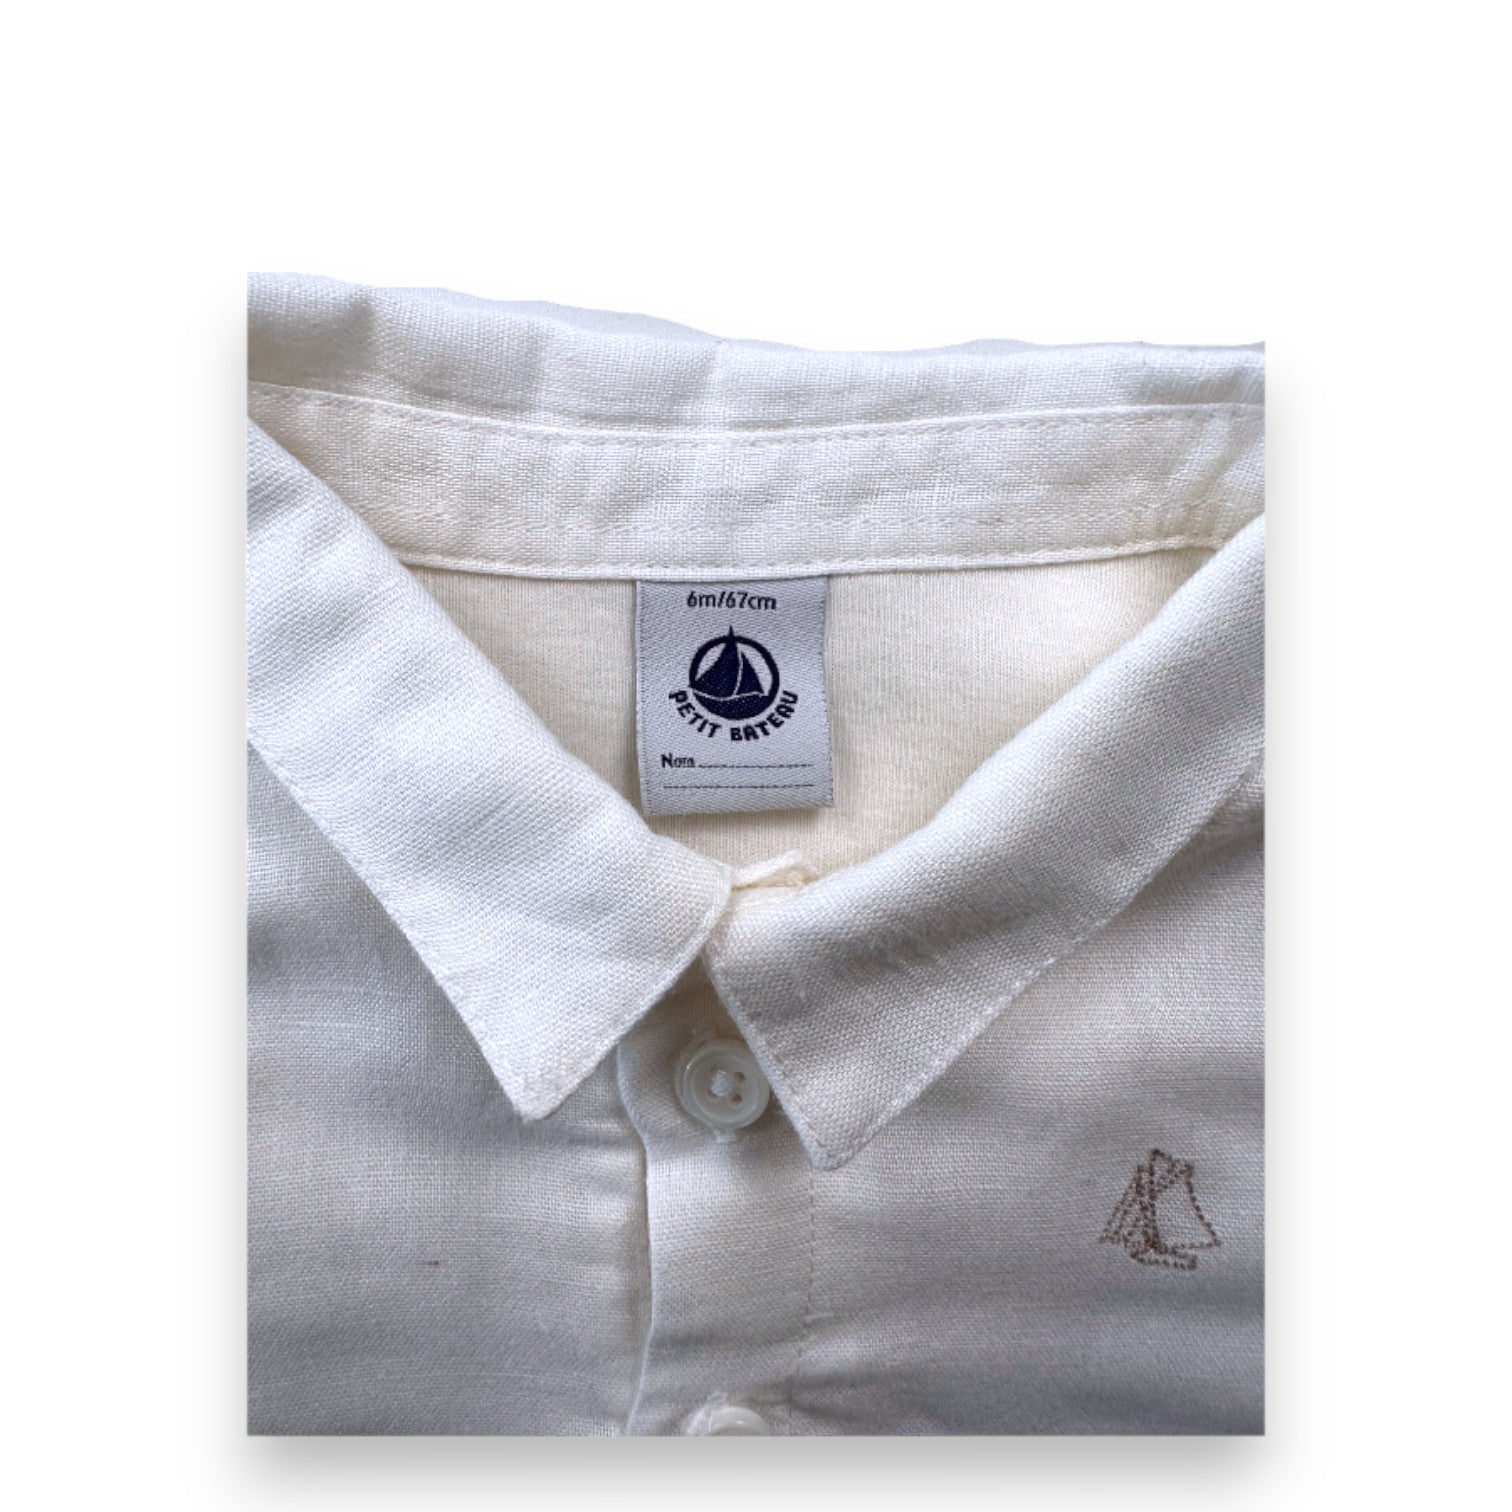 PETIT BATEAU - Body blanc avec chemise en lin - 6 mois